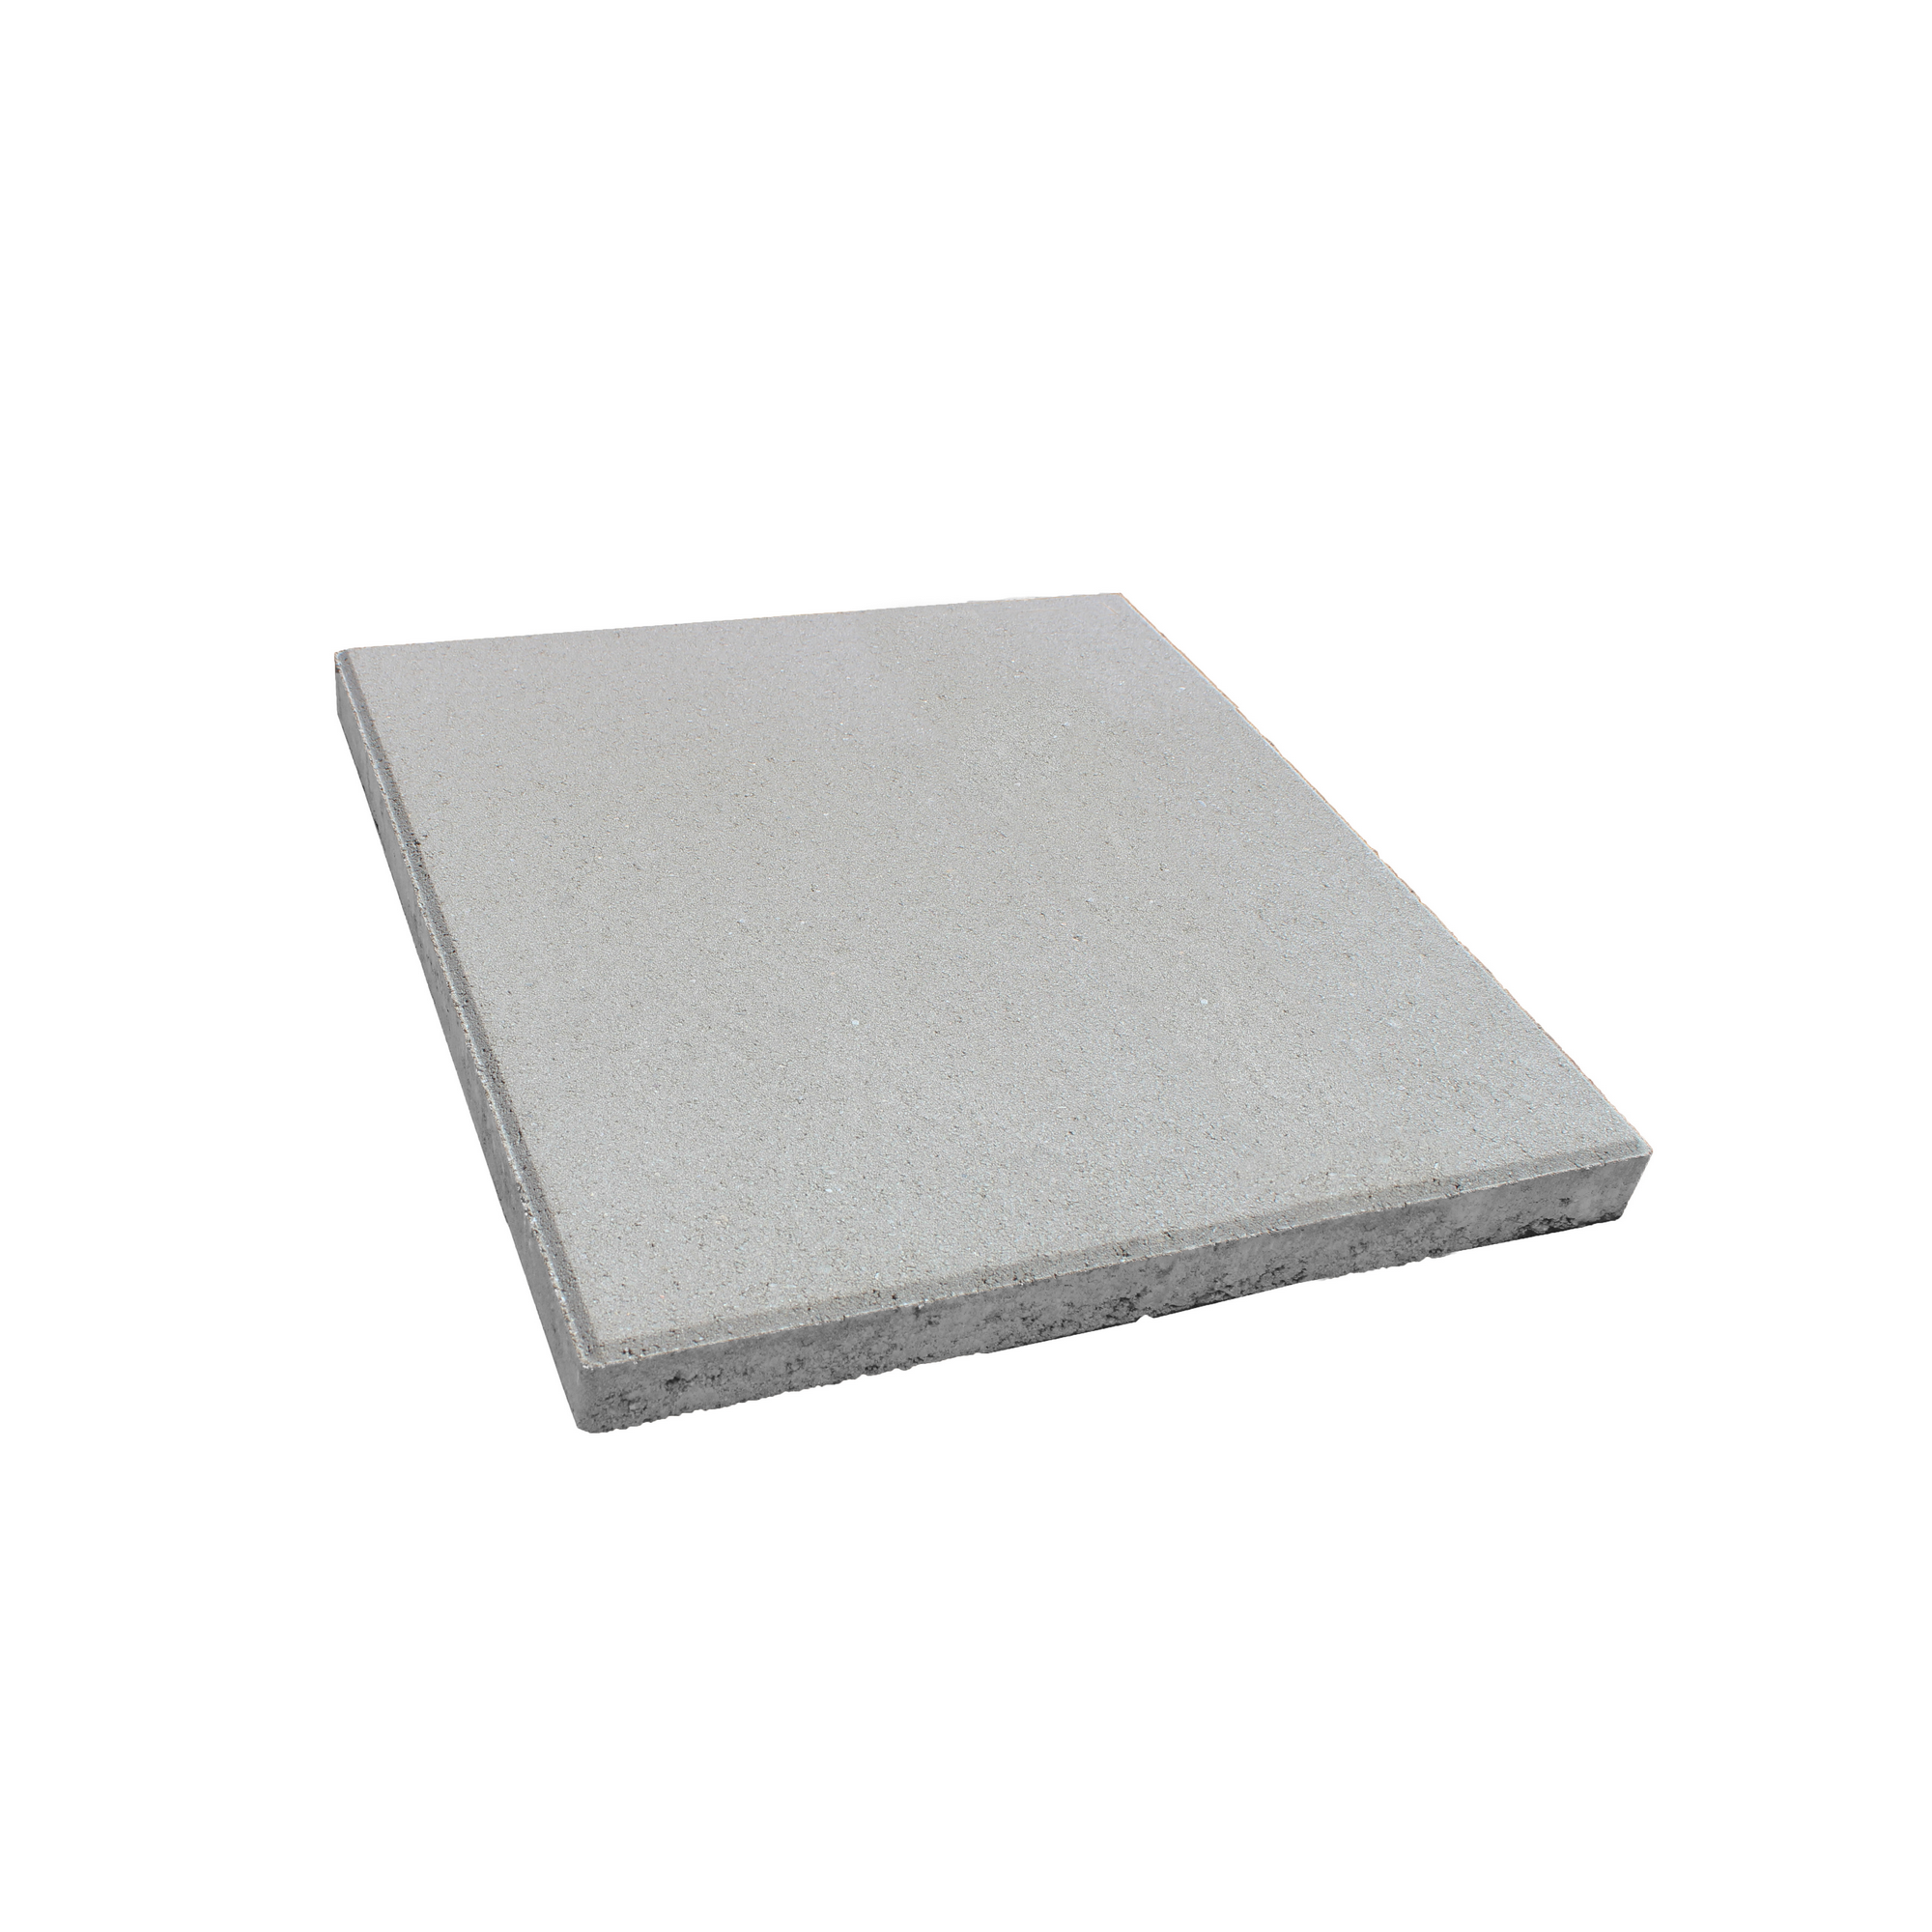 Diephaus Betonplatte grau 50 x 50 x 4 cm